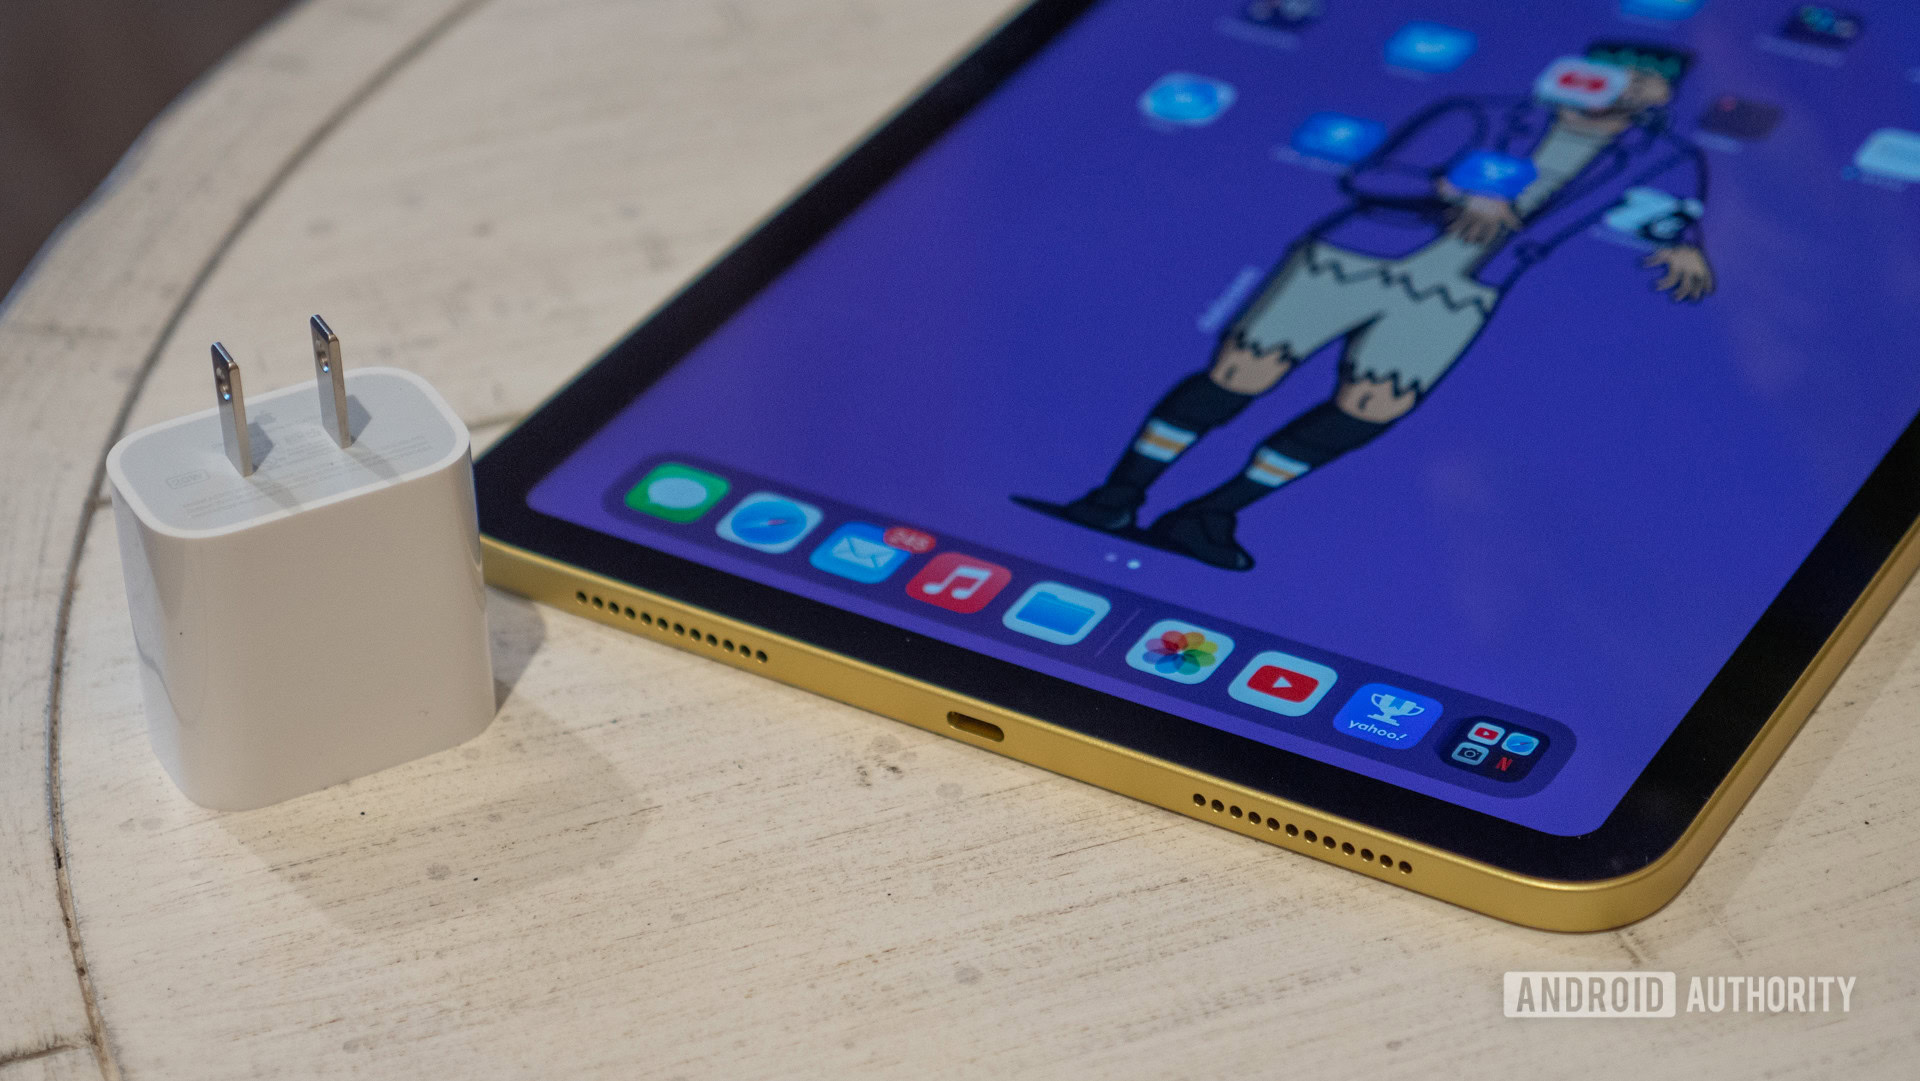 The 7th-gen iPad mini may arrive this fall